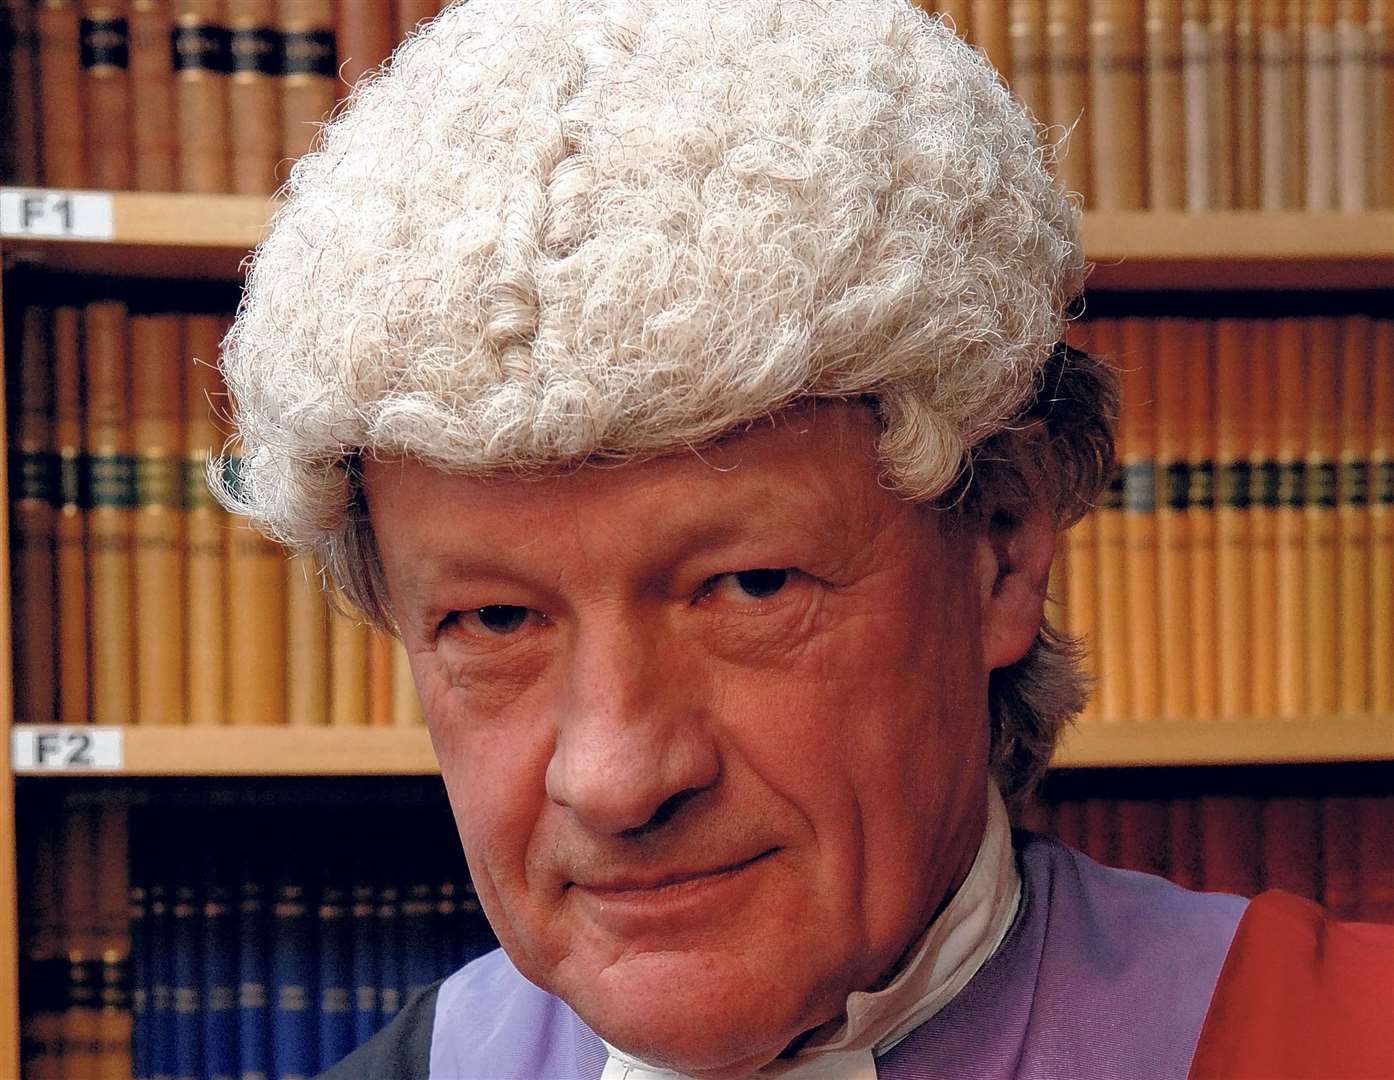 Judge James O'Mahony criticised David Hilden's attitude